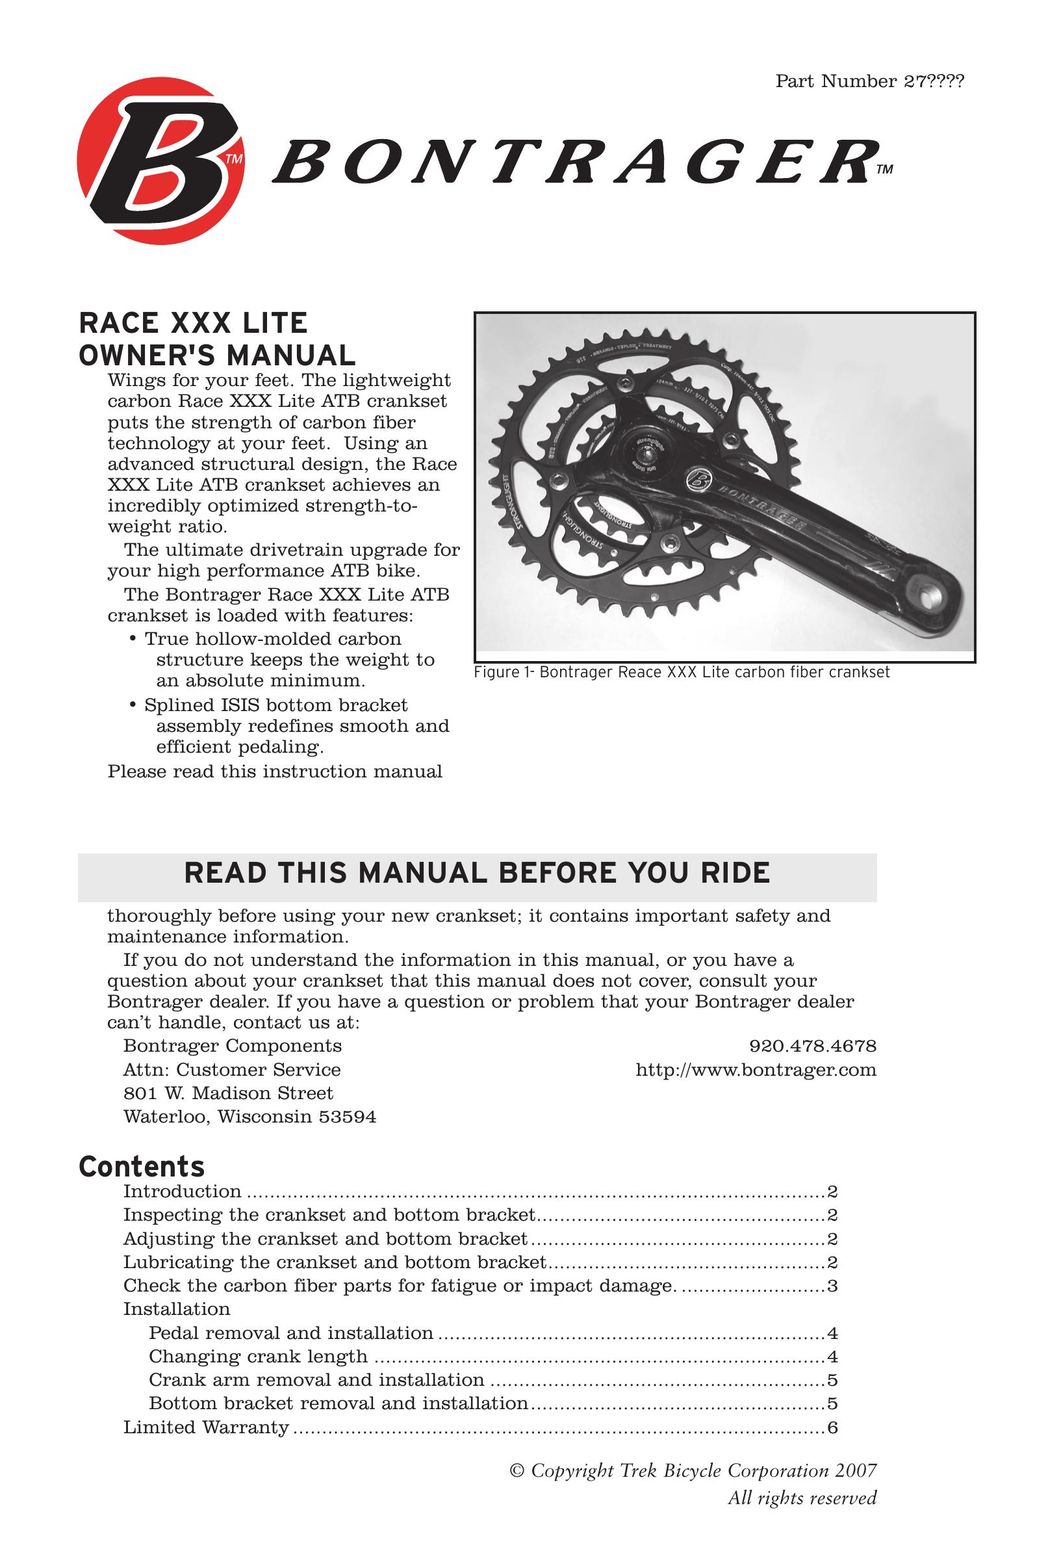 Bontrager Race XXX Lite Bicycle User Manual